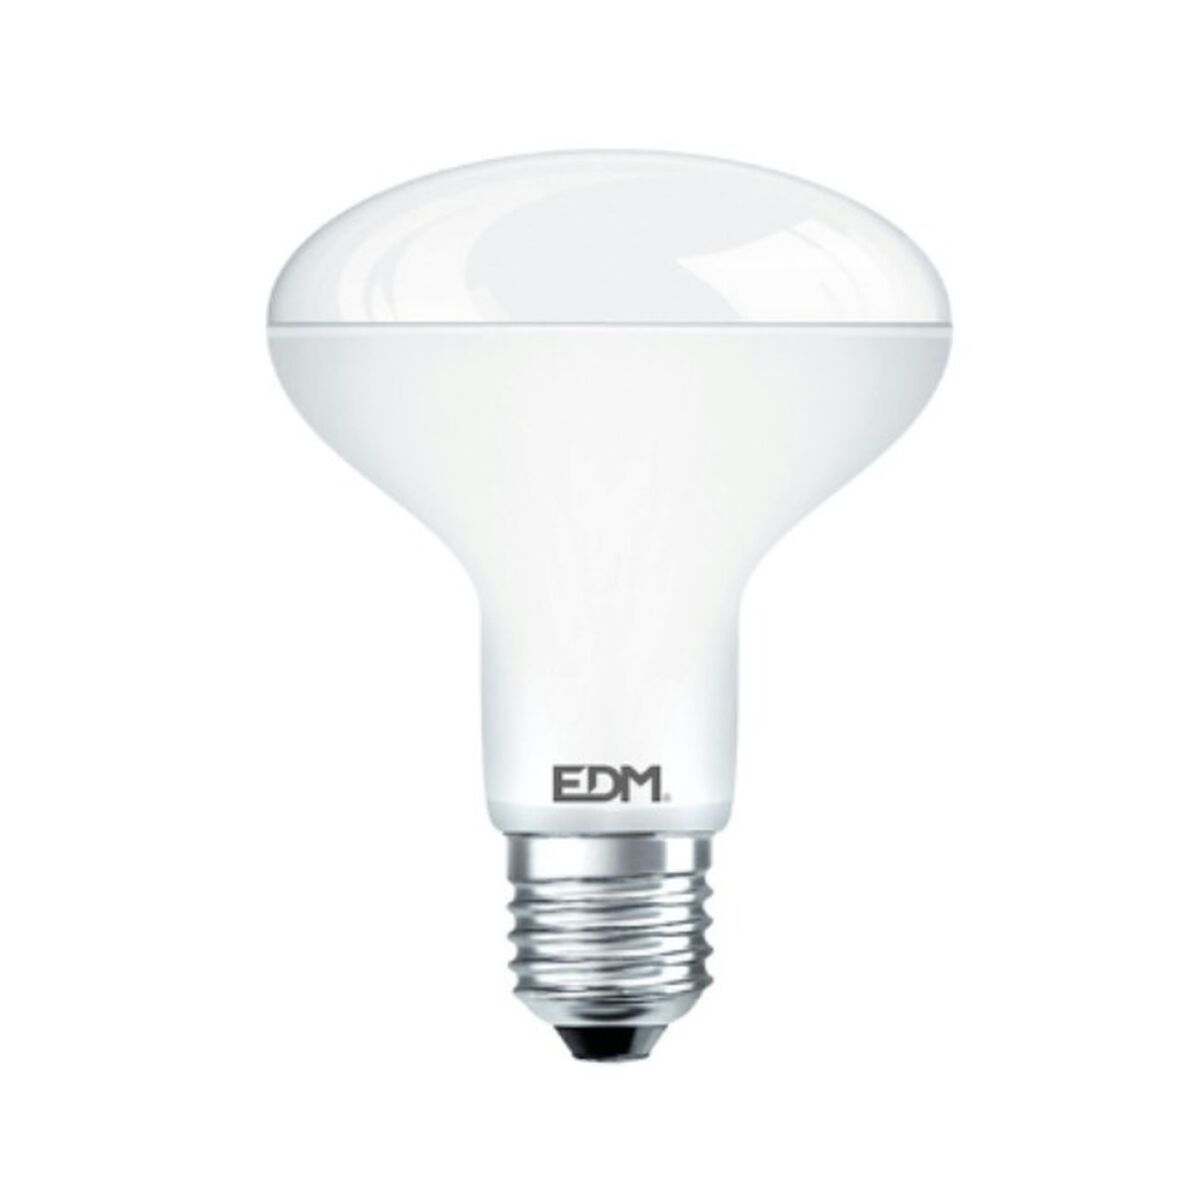 Ledlamp EDM Reflector F 12 W E27 1055 lm Ø 9 x 12 cm (3200 K)